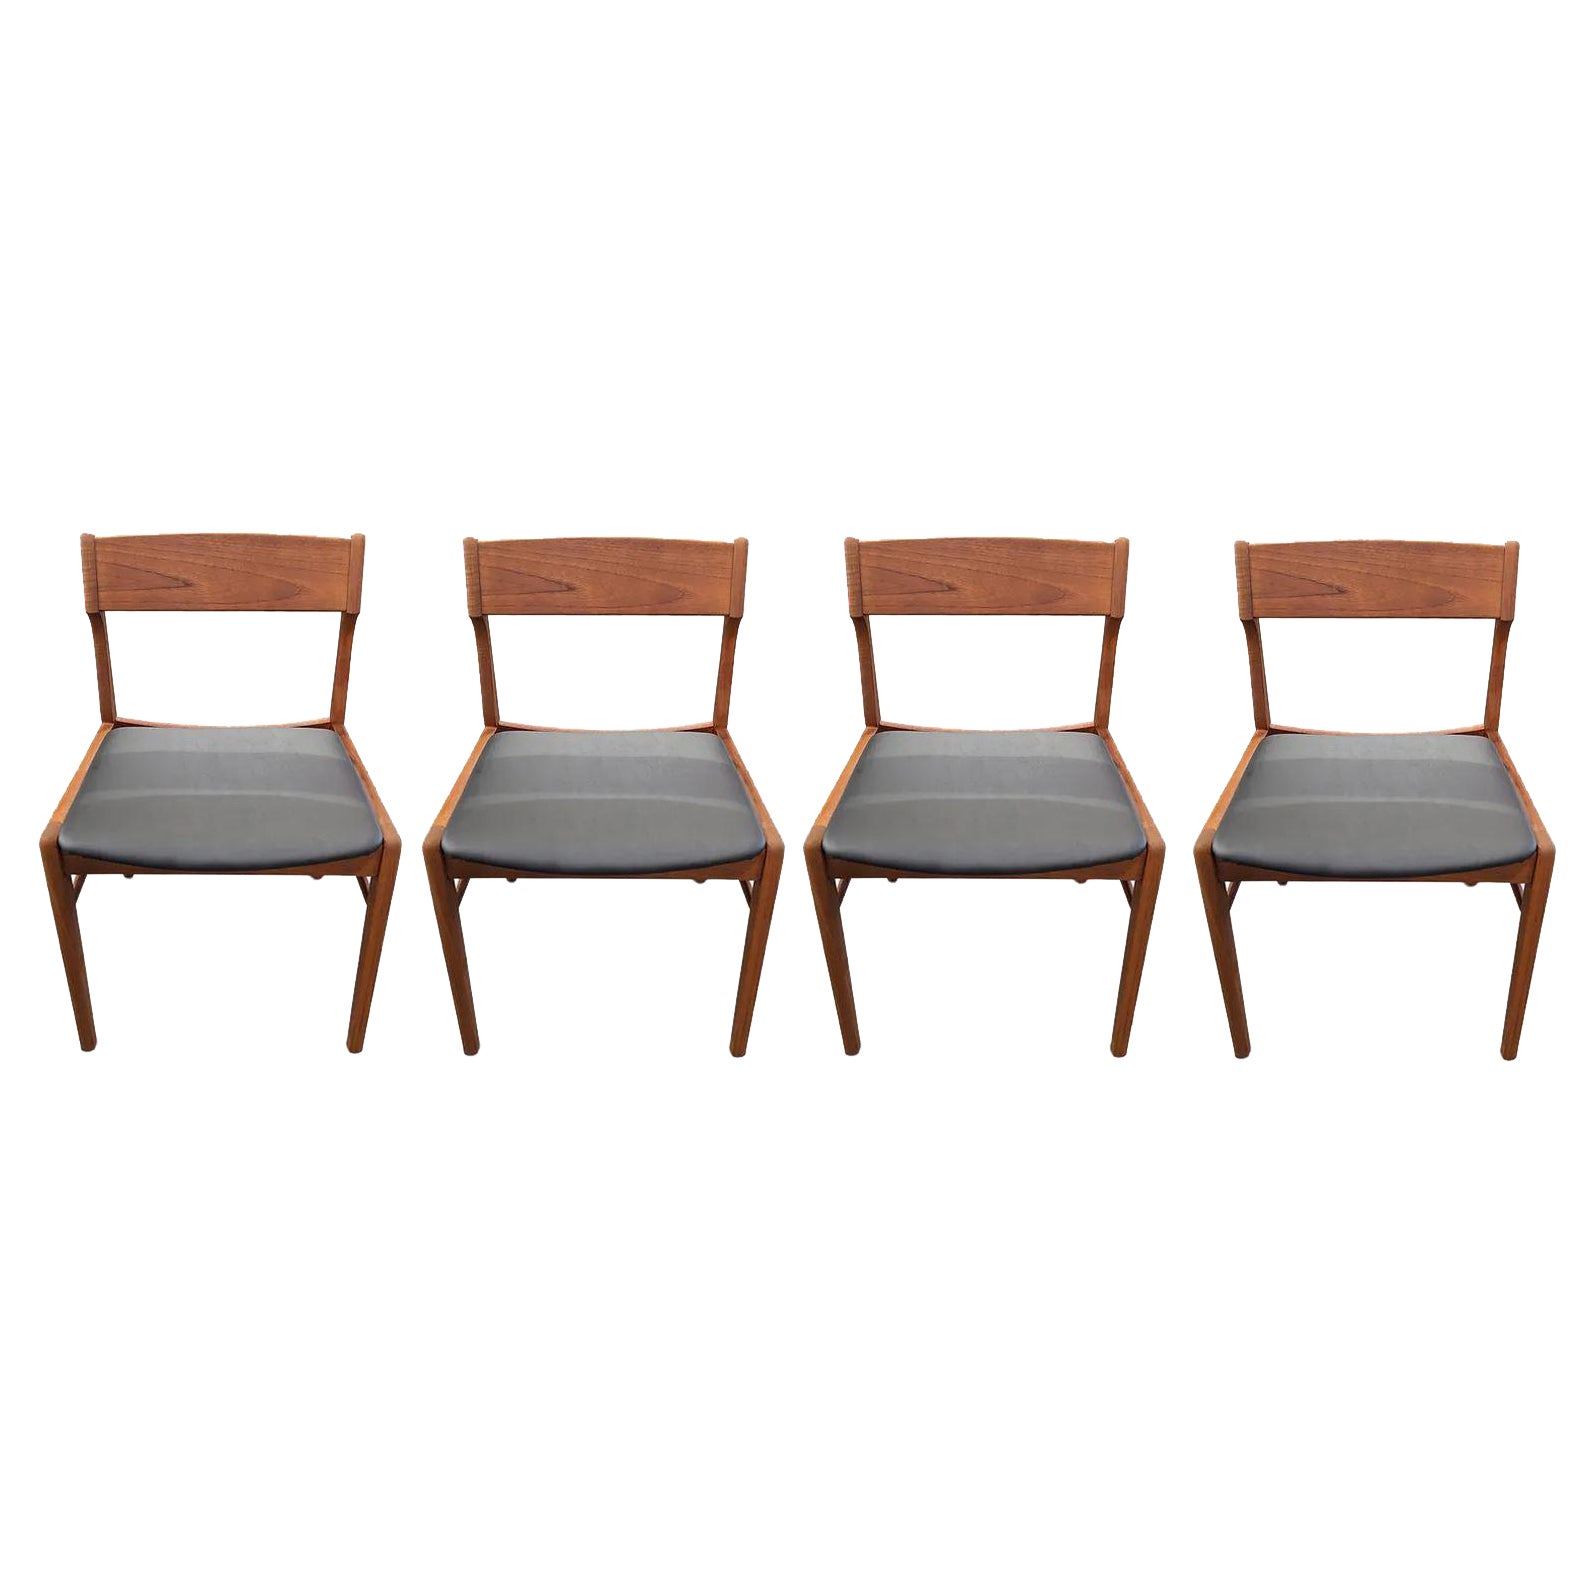 4 Vintage Danish Mid Century Teak Dining Chairs - 072307